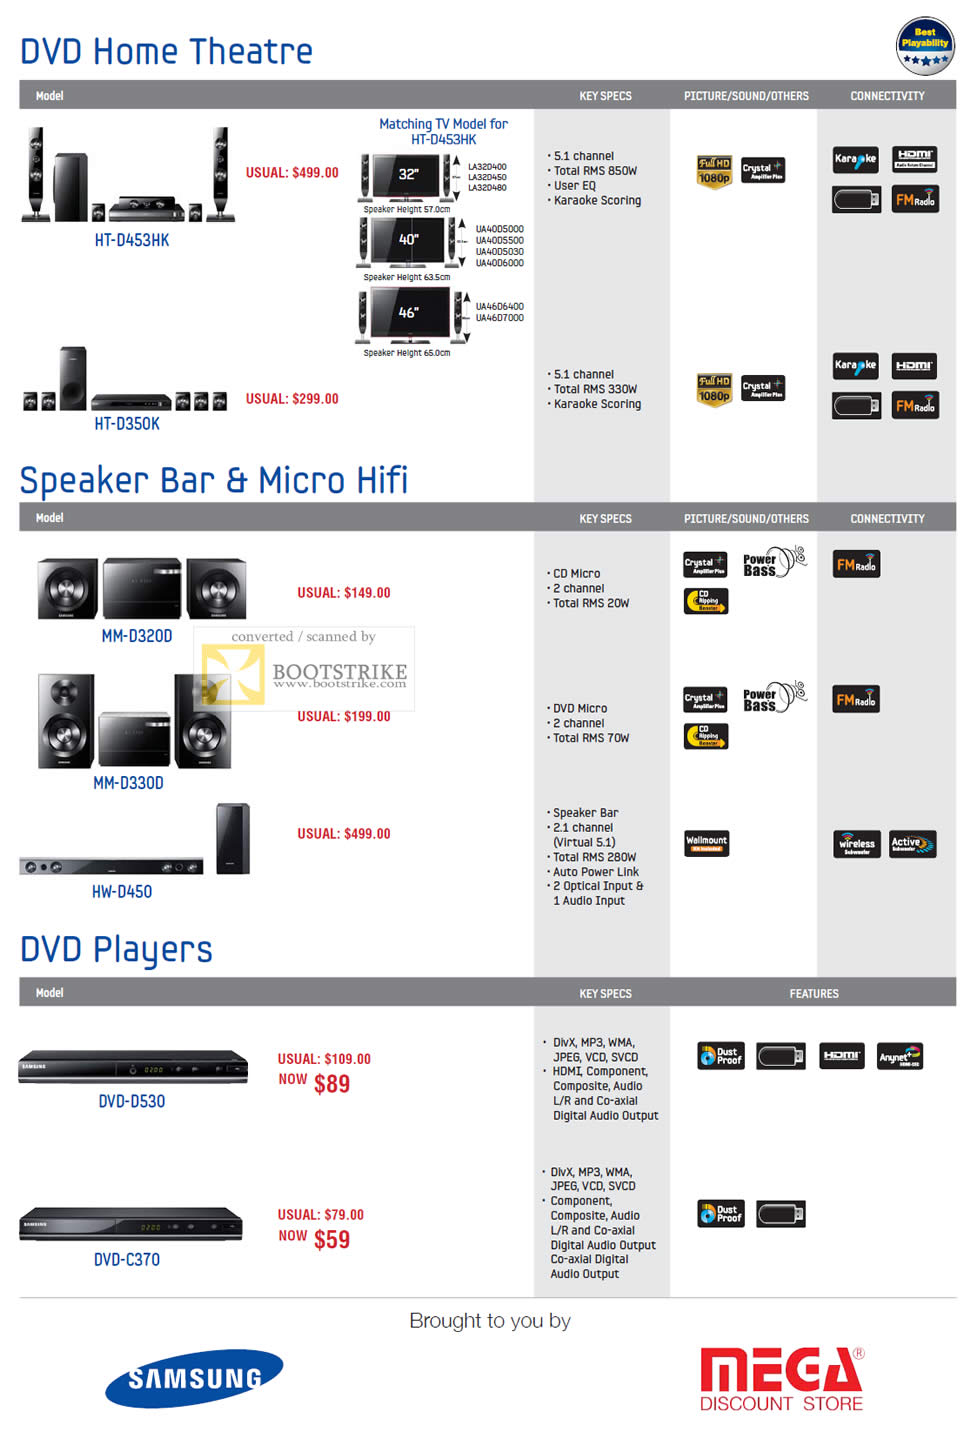 PC Show 2011 price list image brochure of Samsung Mega Discount DVD Home Theatre Speaker Bar Micro Hifi DVD Players